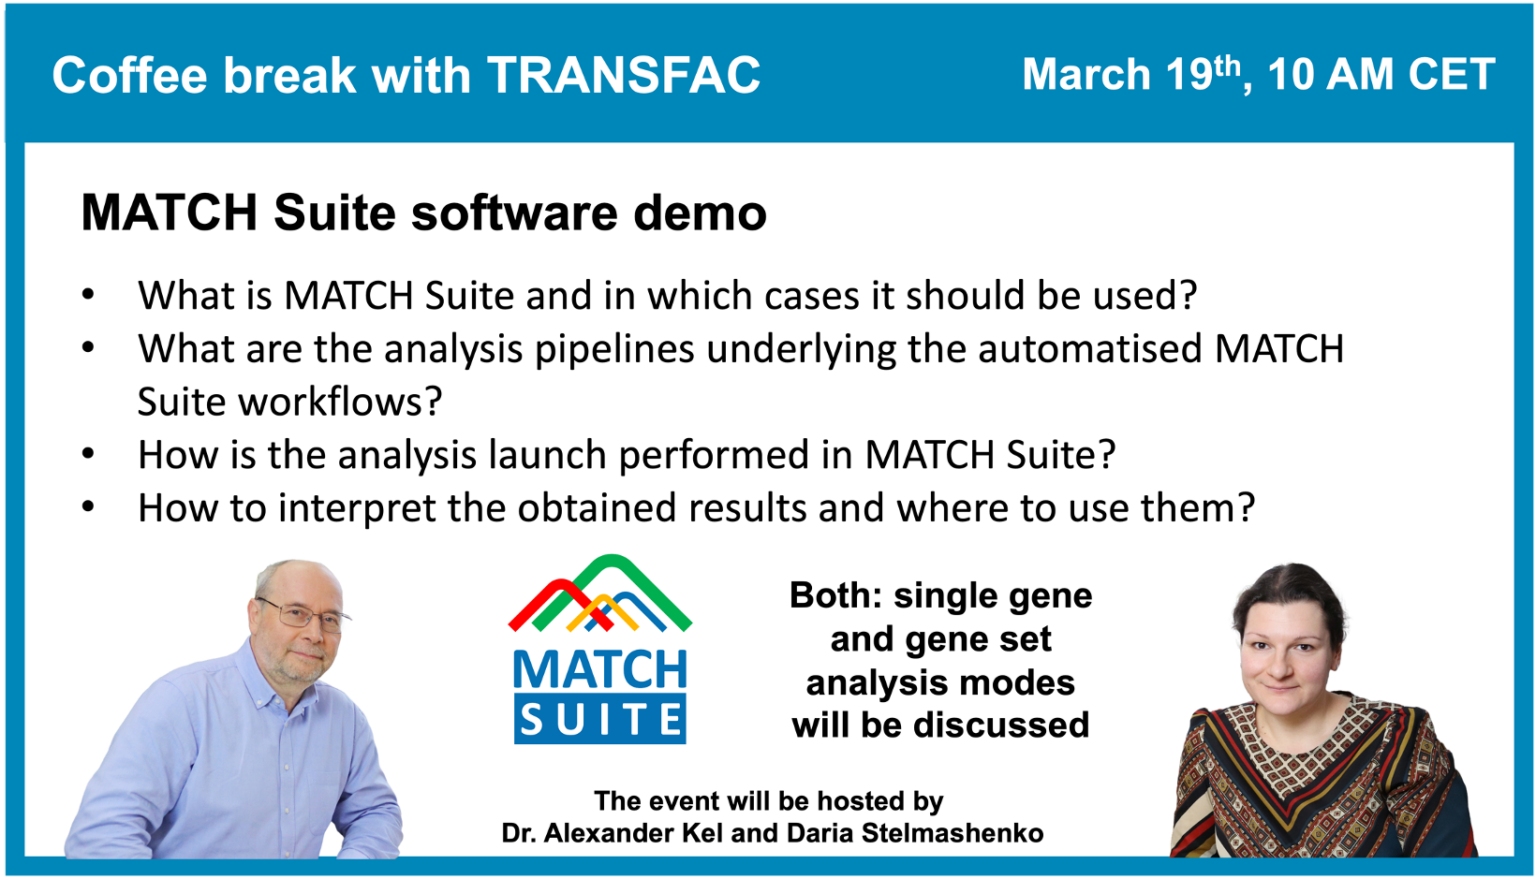 MATCH Suite software demo